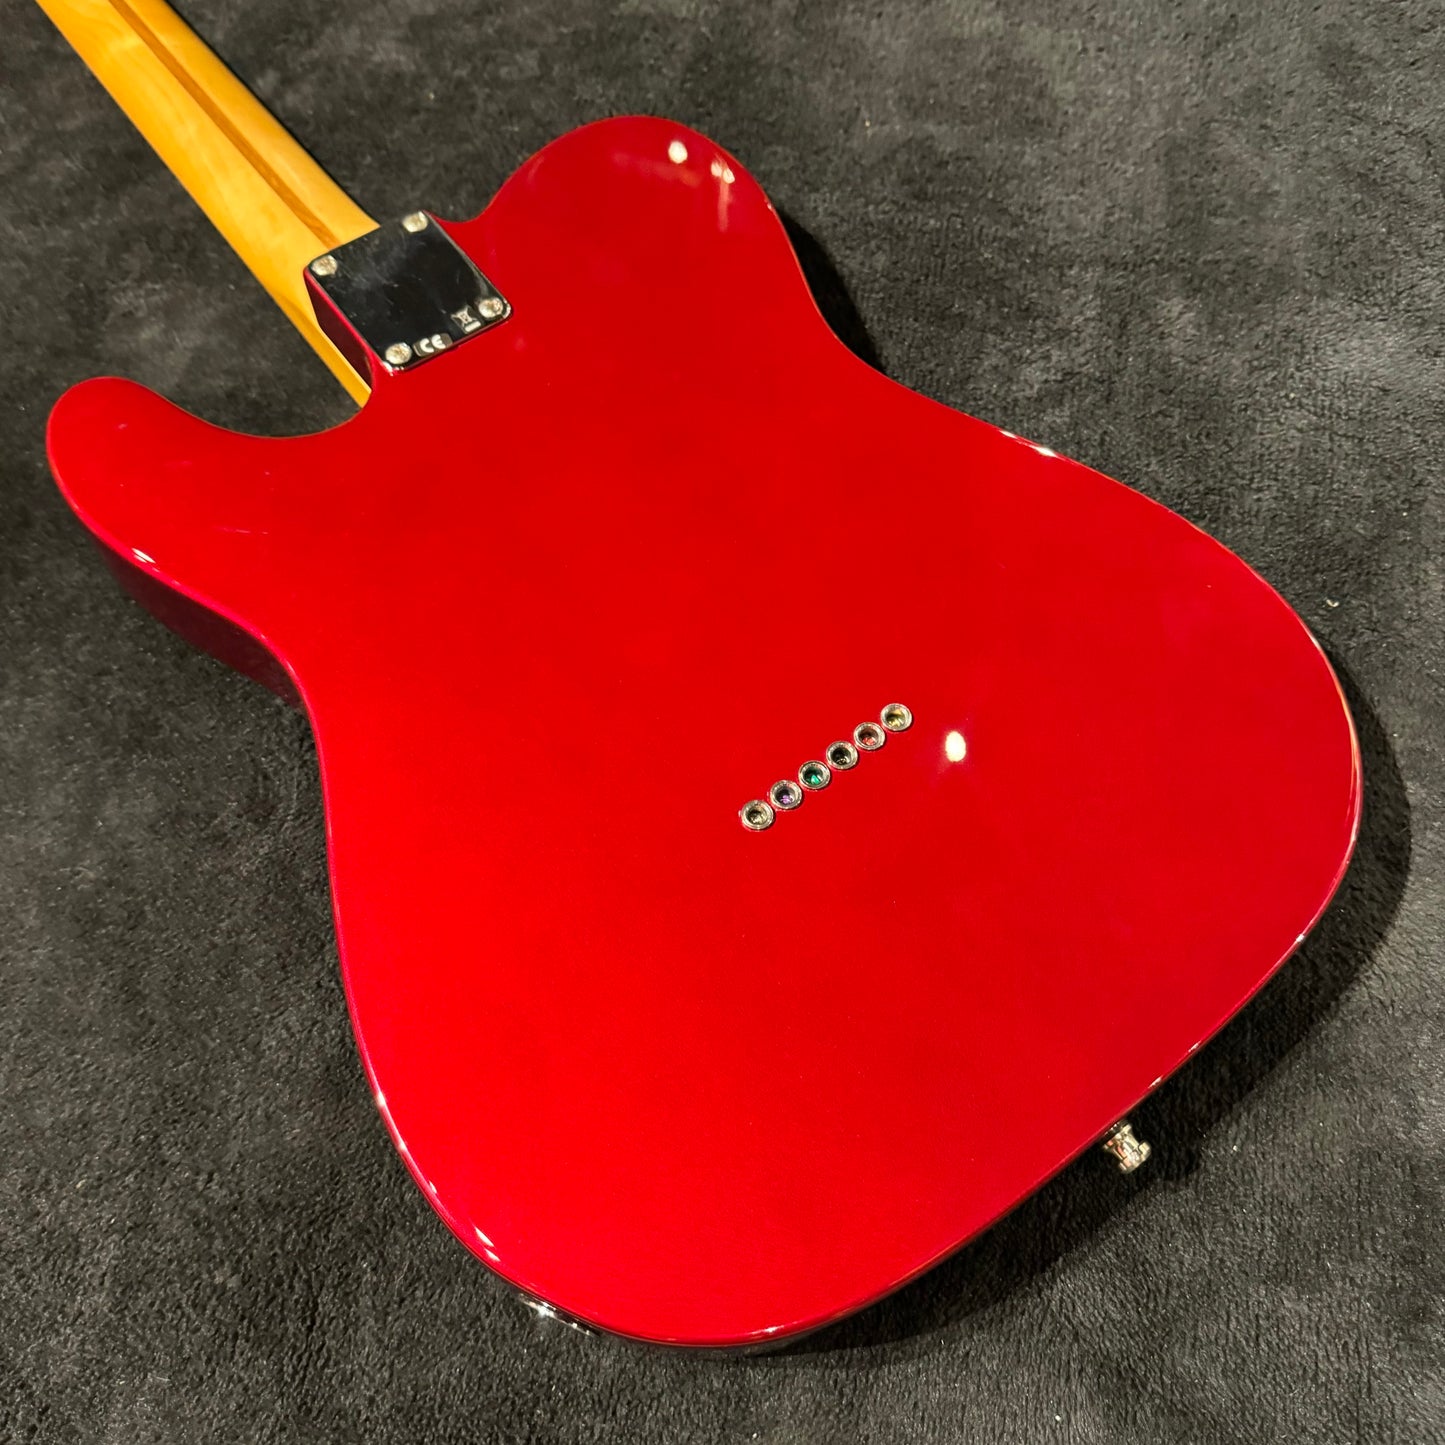 Fender Telecaster MIM Standard Candy Apple Red